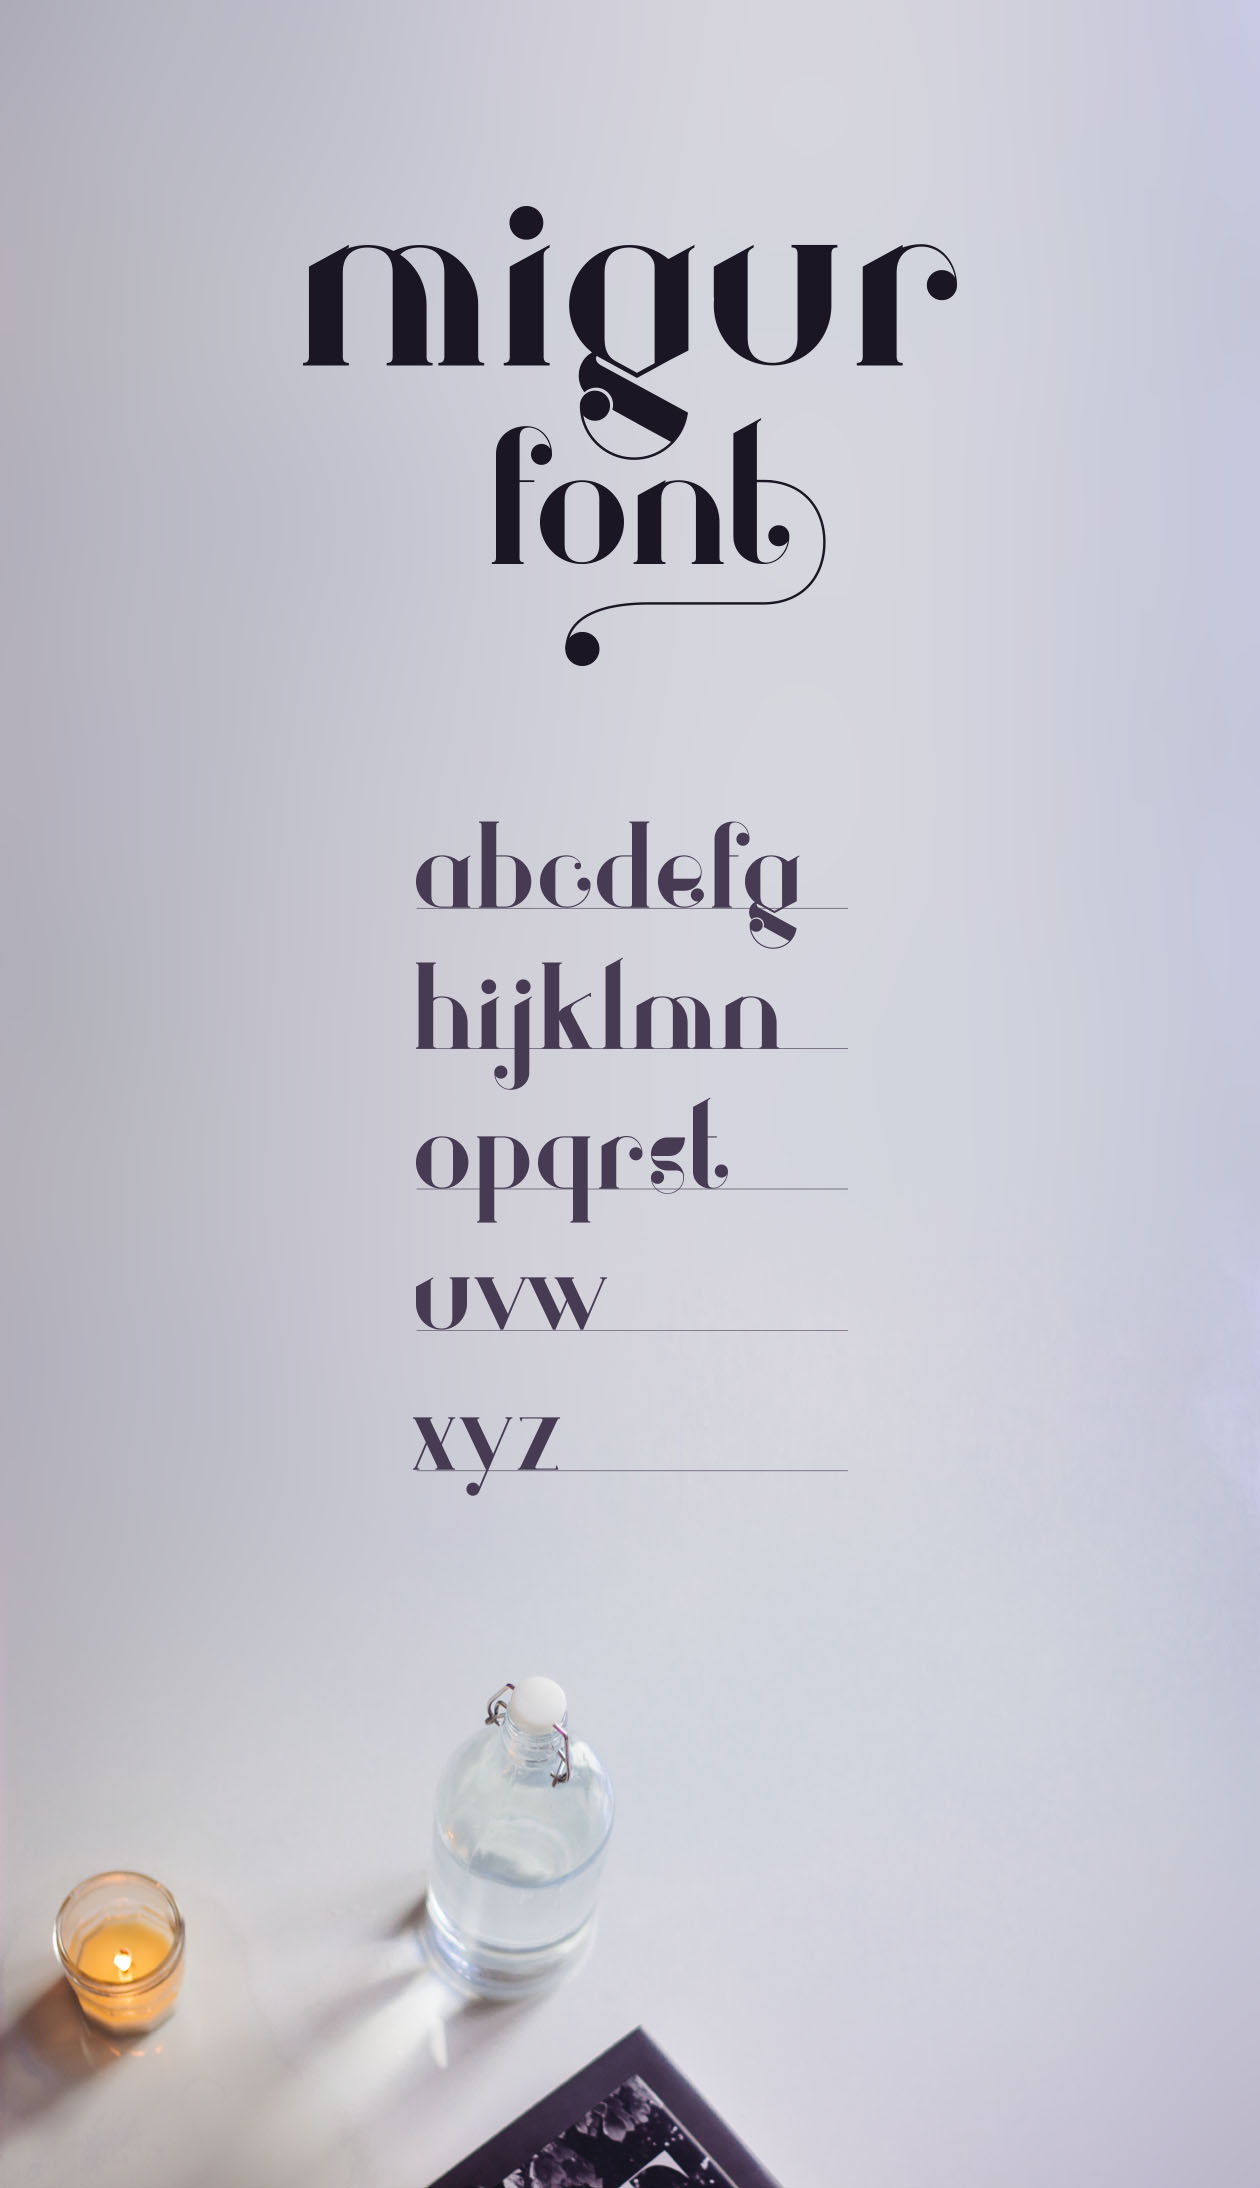 Behance网站推荐最佳英文排版印刷字体16设计素材网精选之一 Migur Serif Font插图(1)